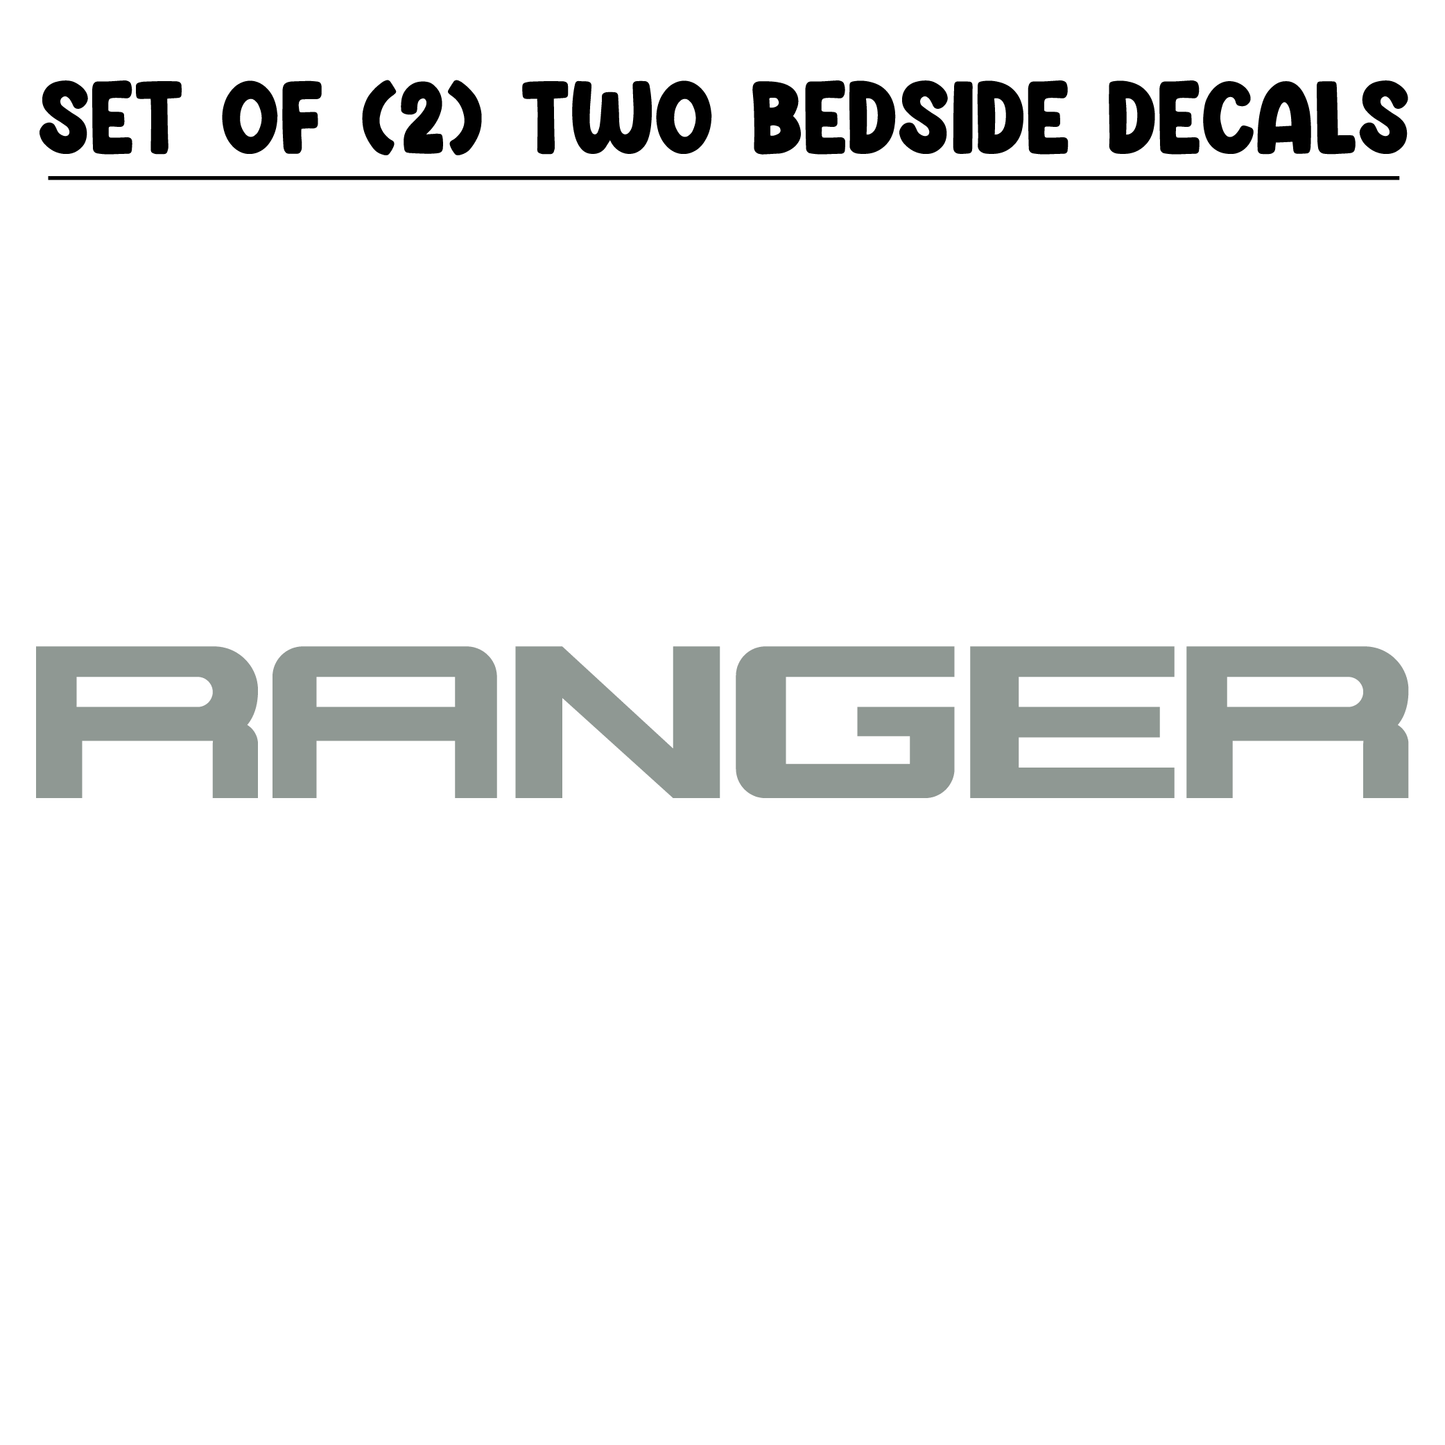 Shop Vinyl Design Ranger Trucks Replacement Bedside Decals #002 Vehicle decal 001 Grey Gloss Shop Vinyl Design decals stickers